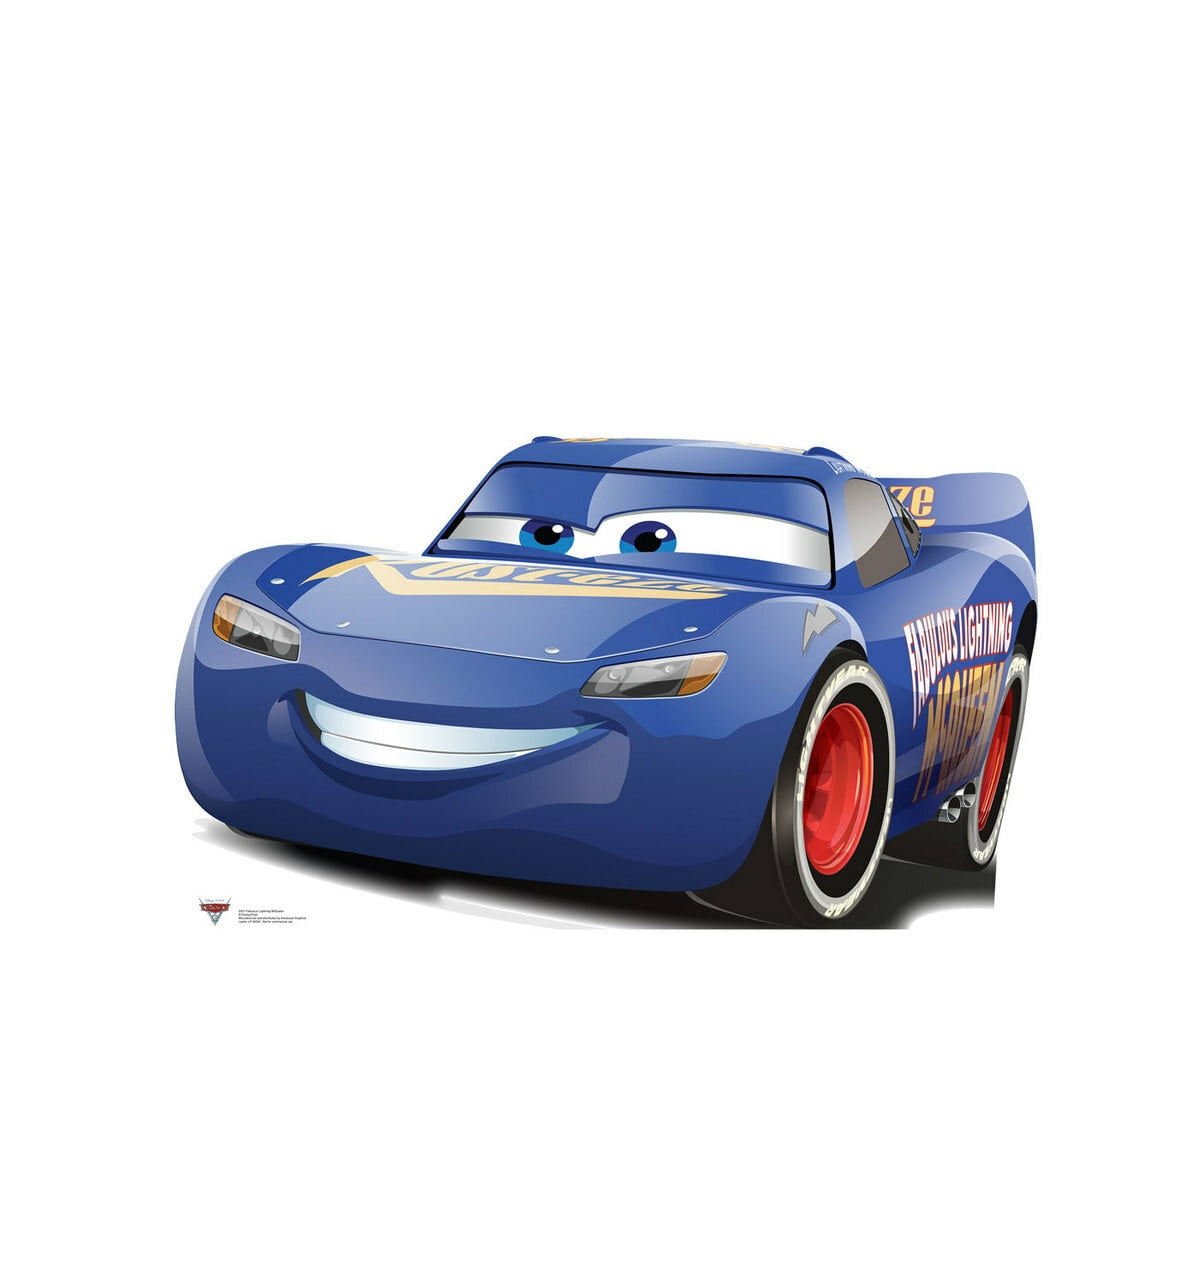 Plüsch Disney Cars 3 Guido ca 17cm 